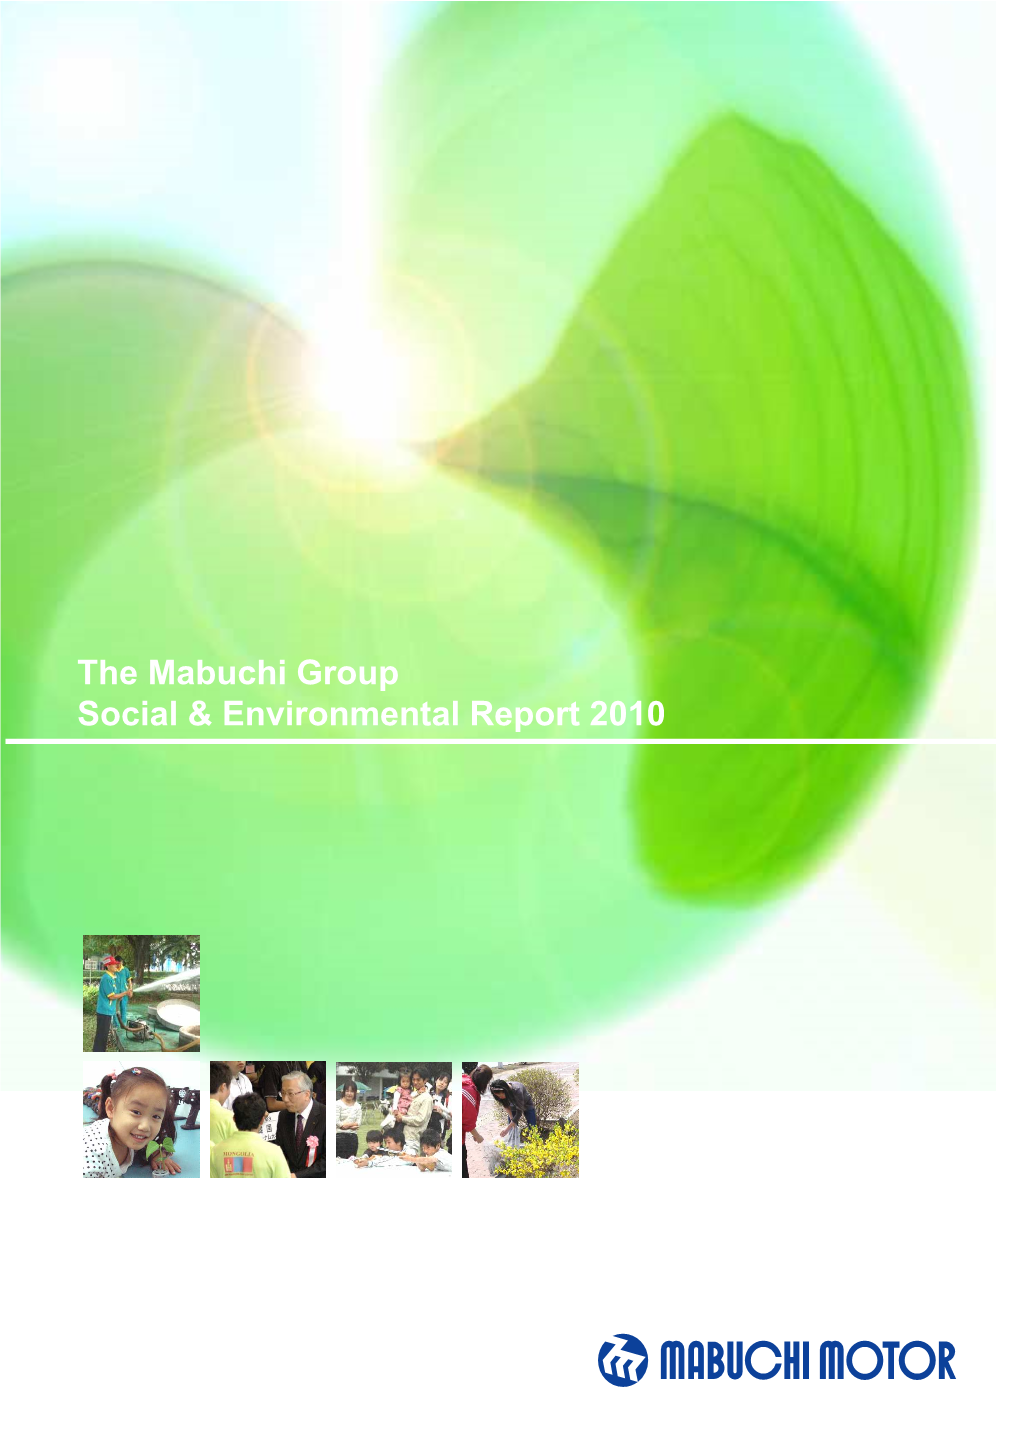 The Mabuchi Group Social & Environmental Report 2010